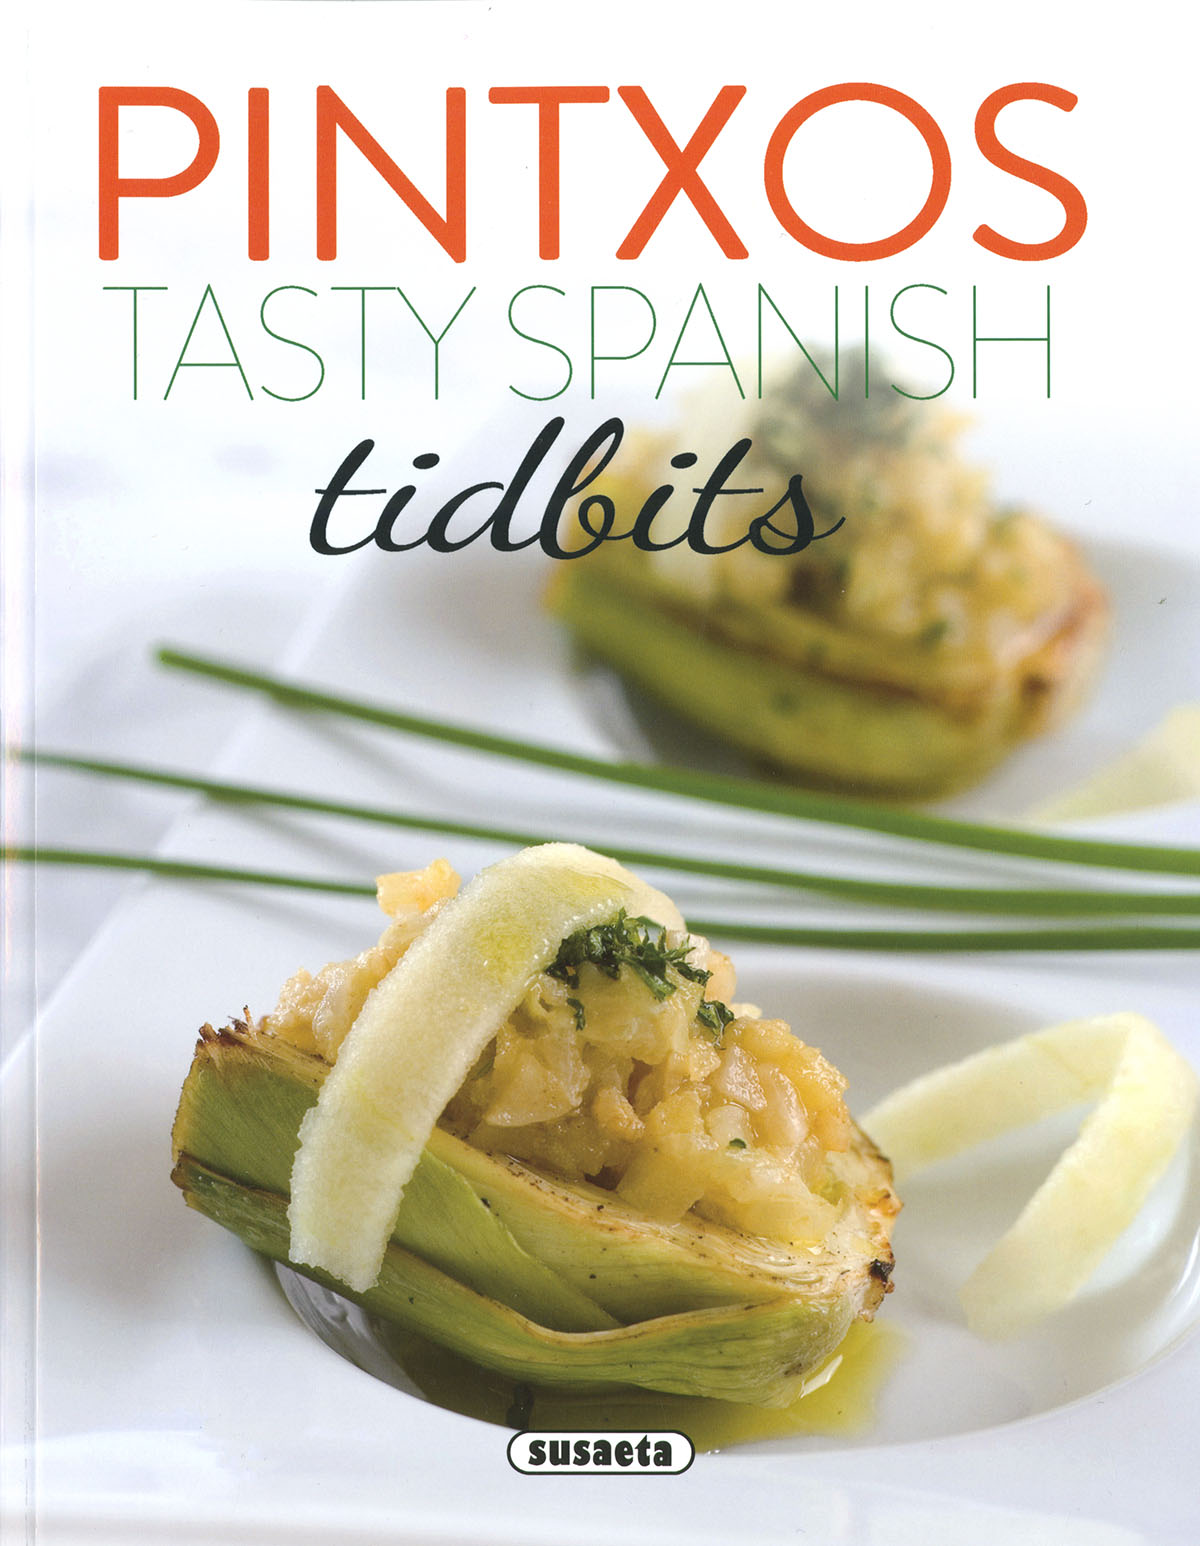 Pintxos. Tasty Spanish Tidbits